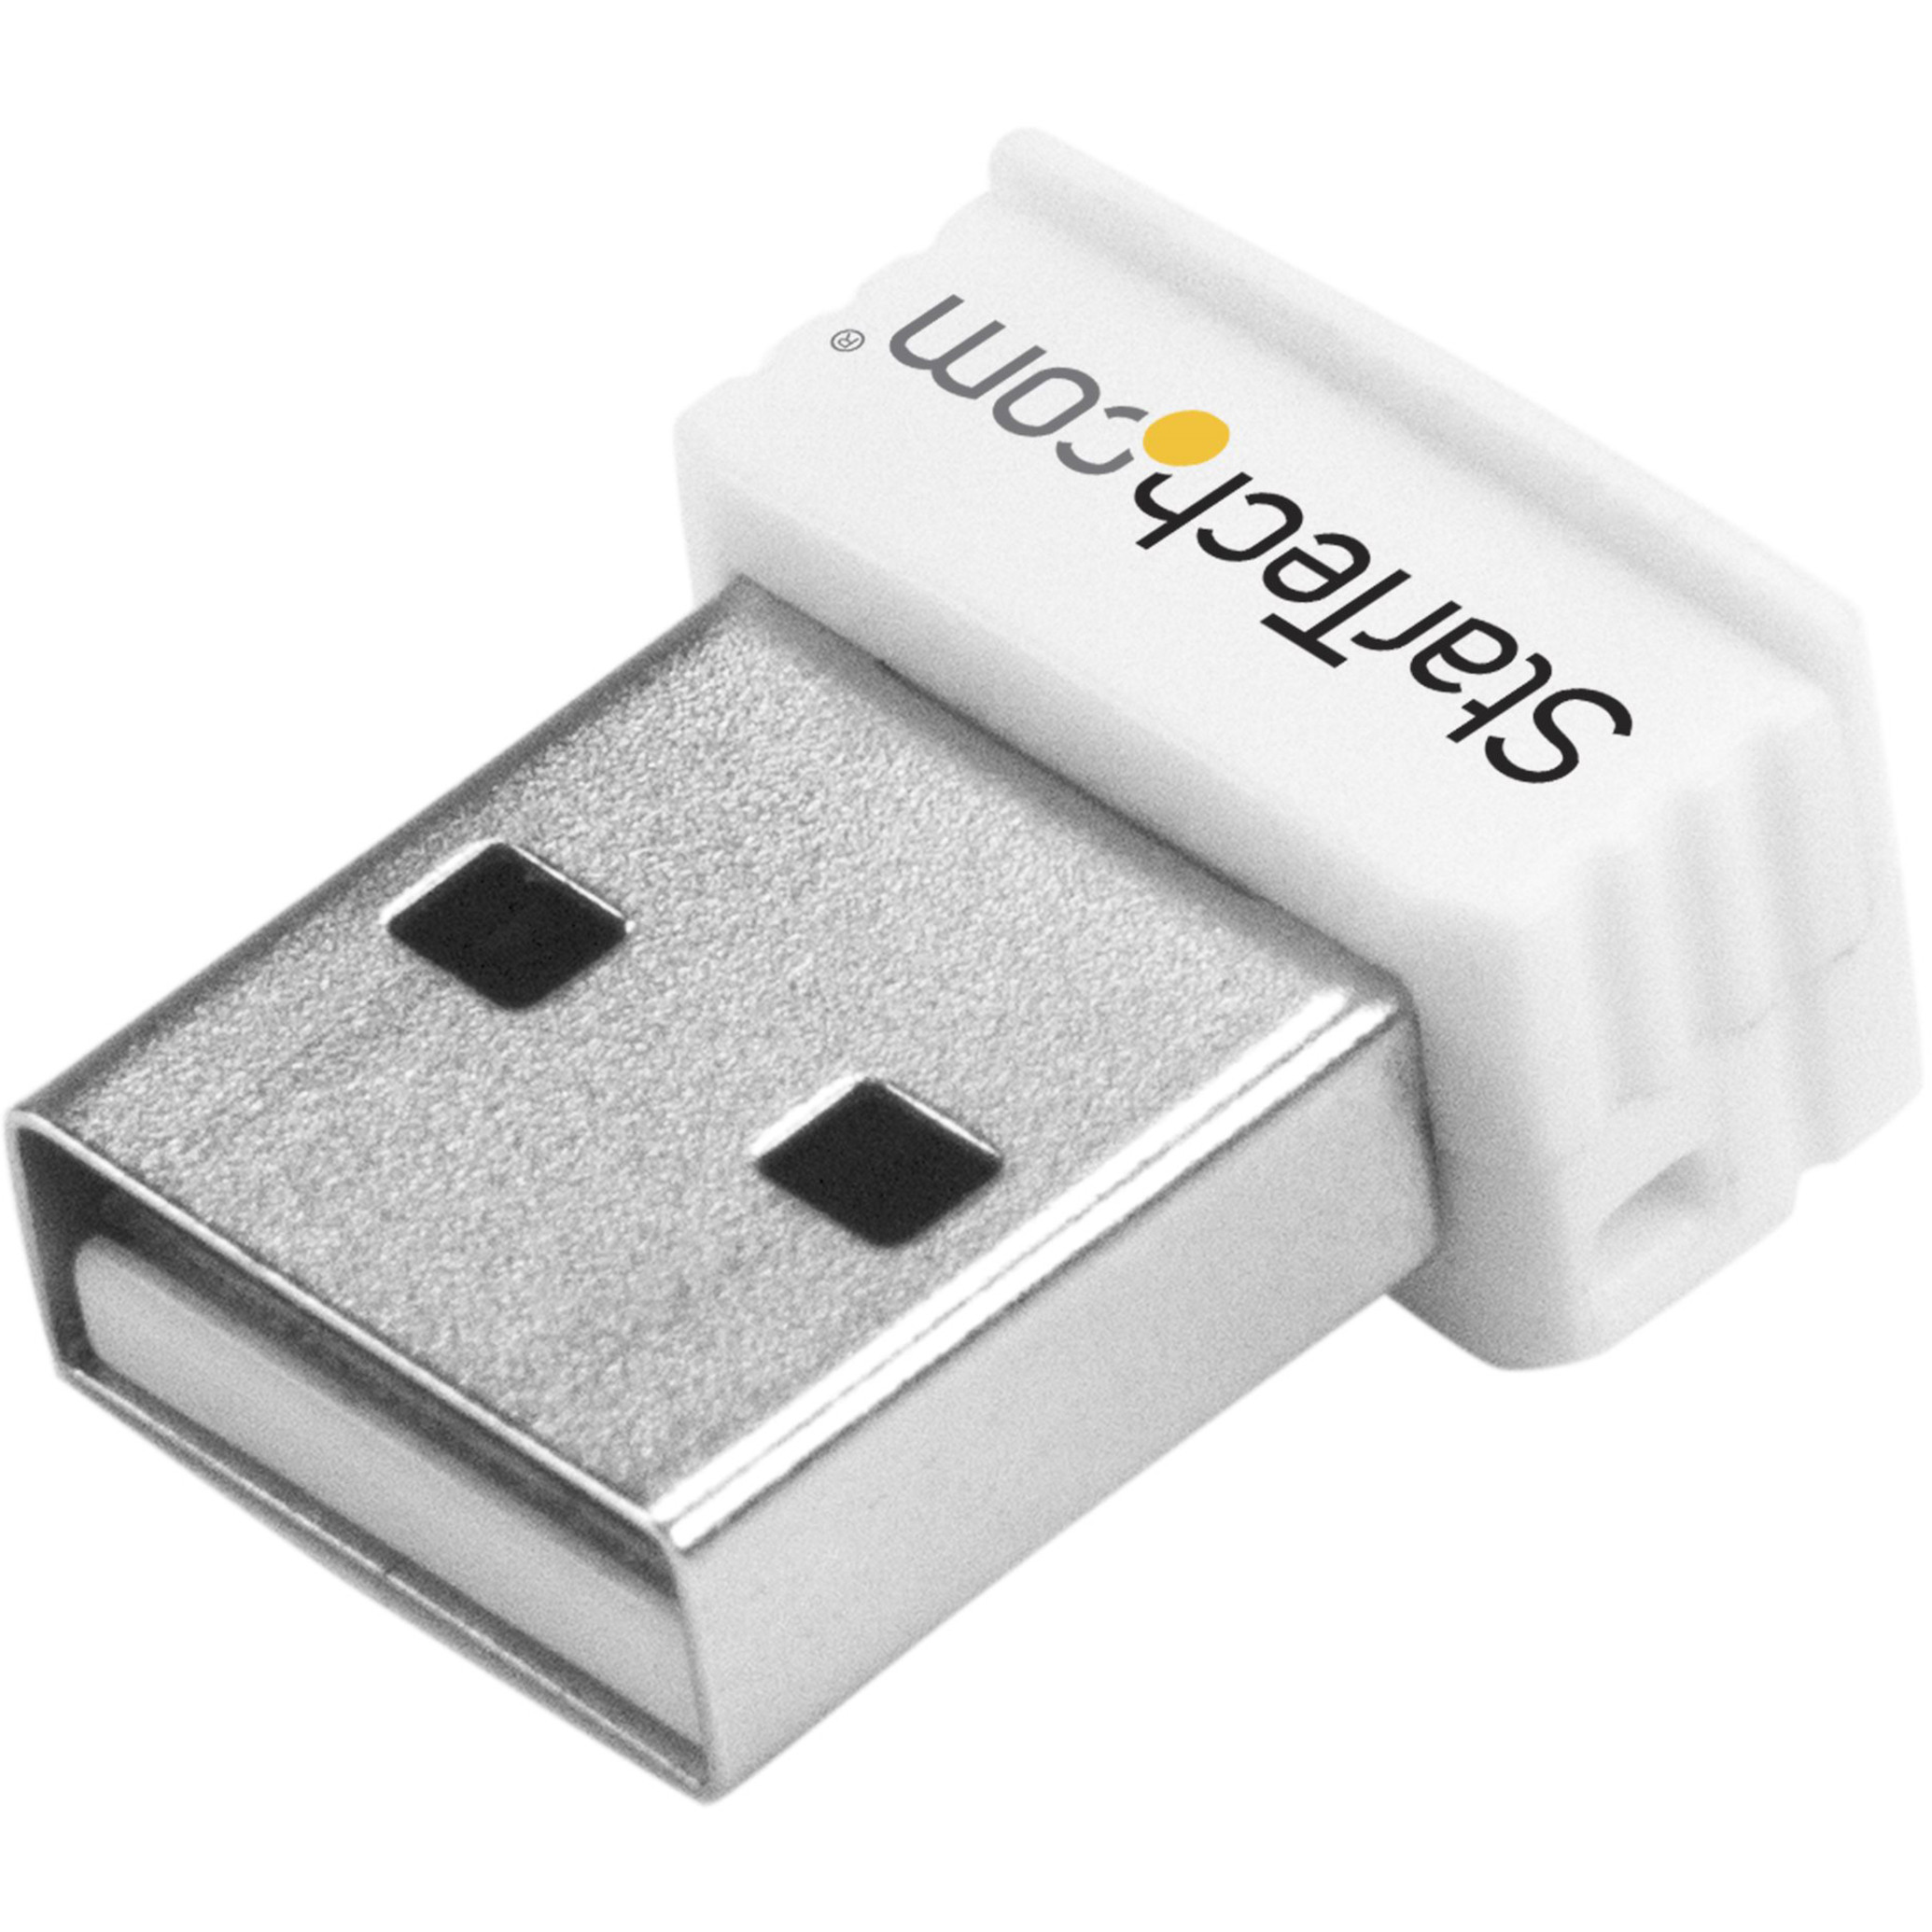 Startech .com USB 150Mbps Mini Wireless N Network Adapter802.11n/g 1T1R USB WiFi AdapterWhiteAdd High Speed Wireless N Connectivity… USB150WN1X1W